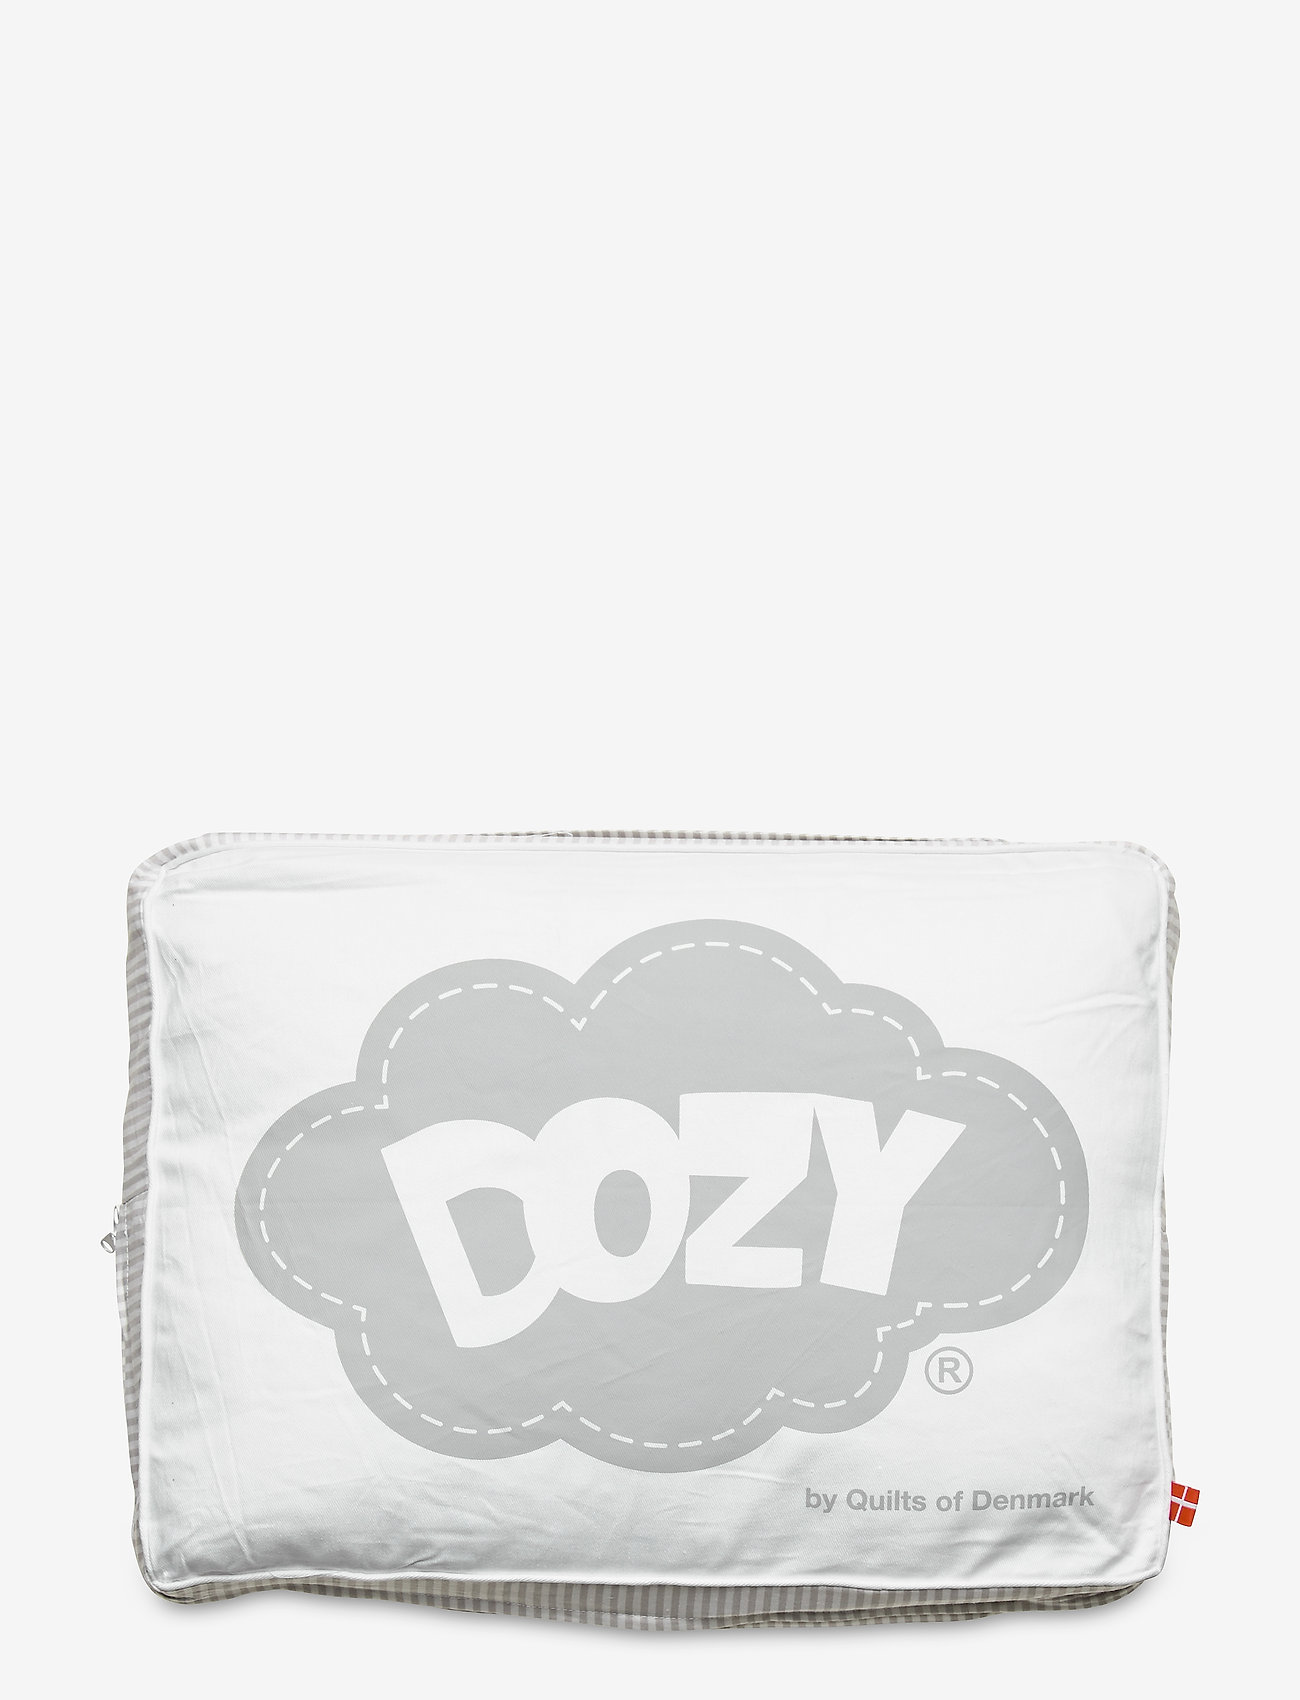 Dozy - Muscovy Down Baby Duvet - Winter Edition - segas - white - 1